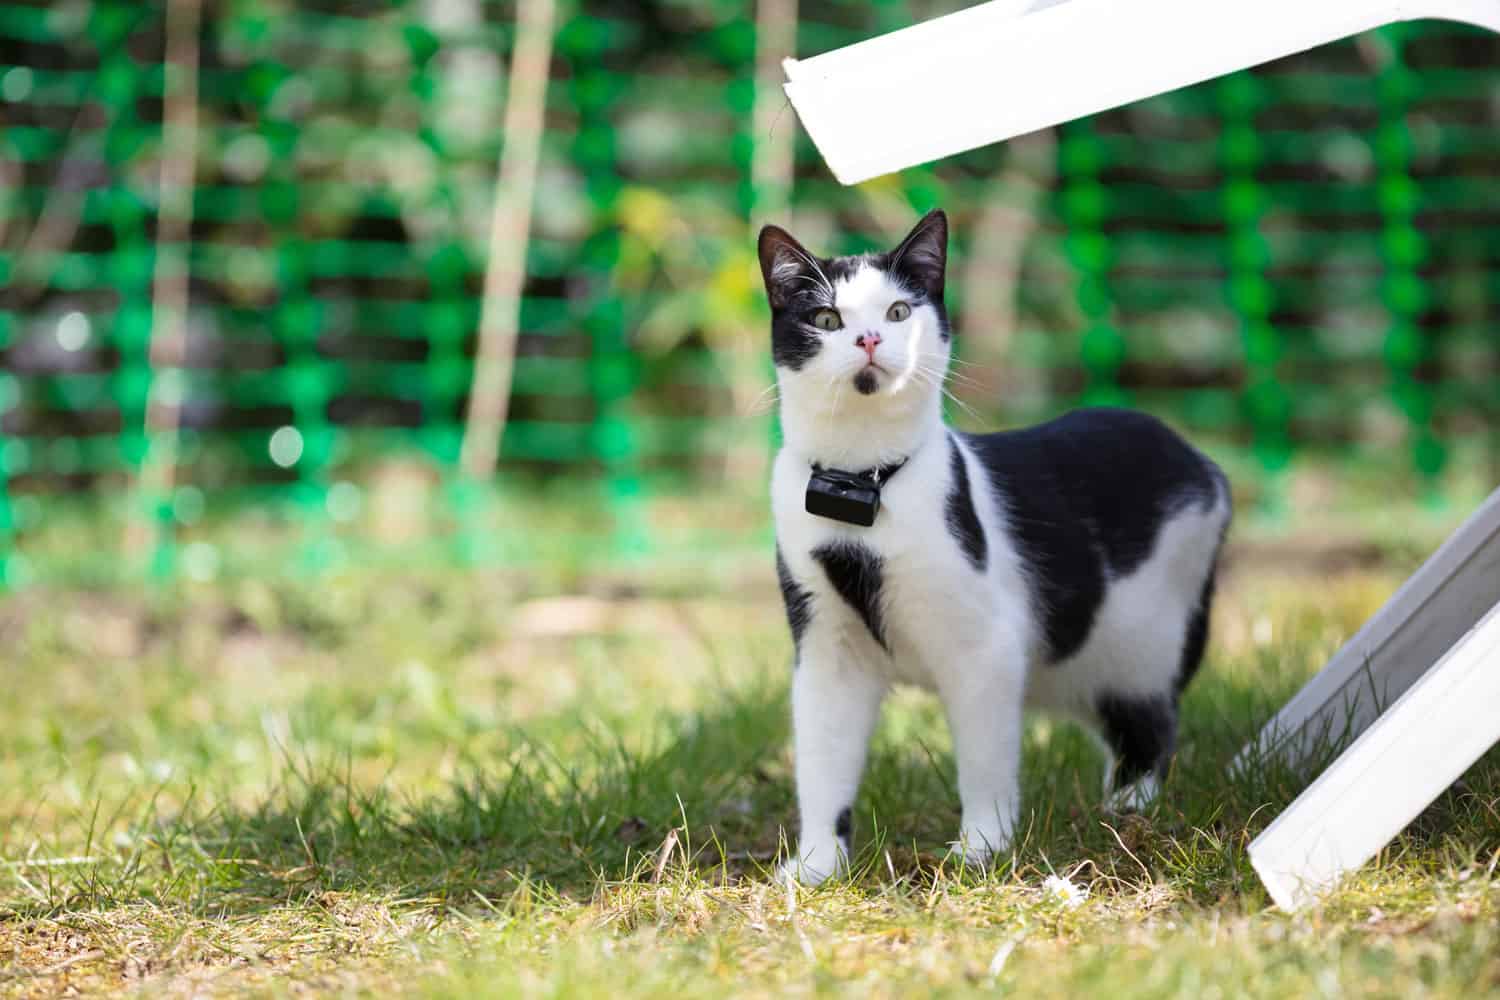 Tuxedo cat playing outside